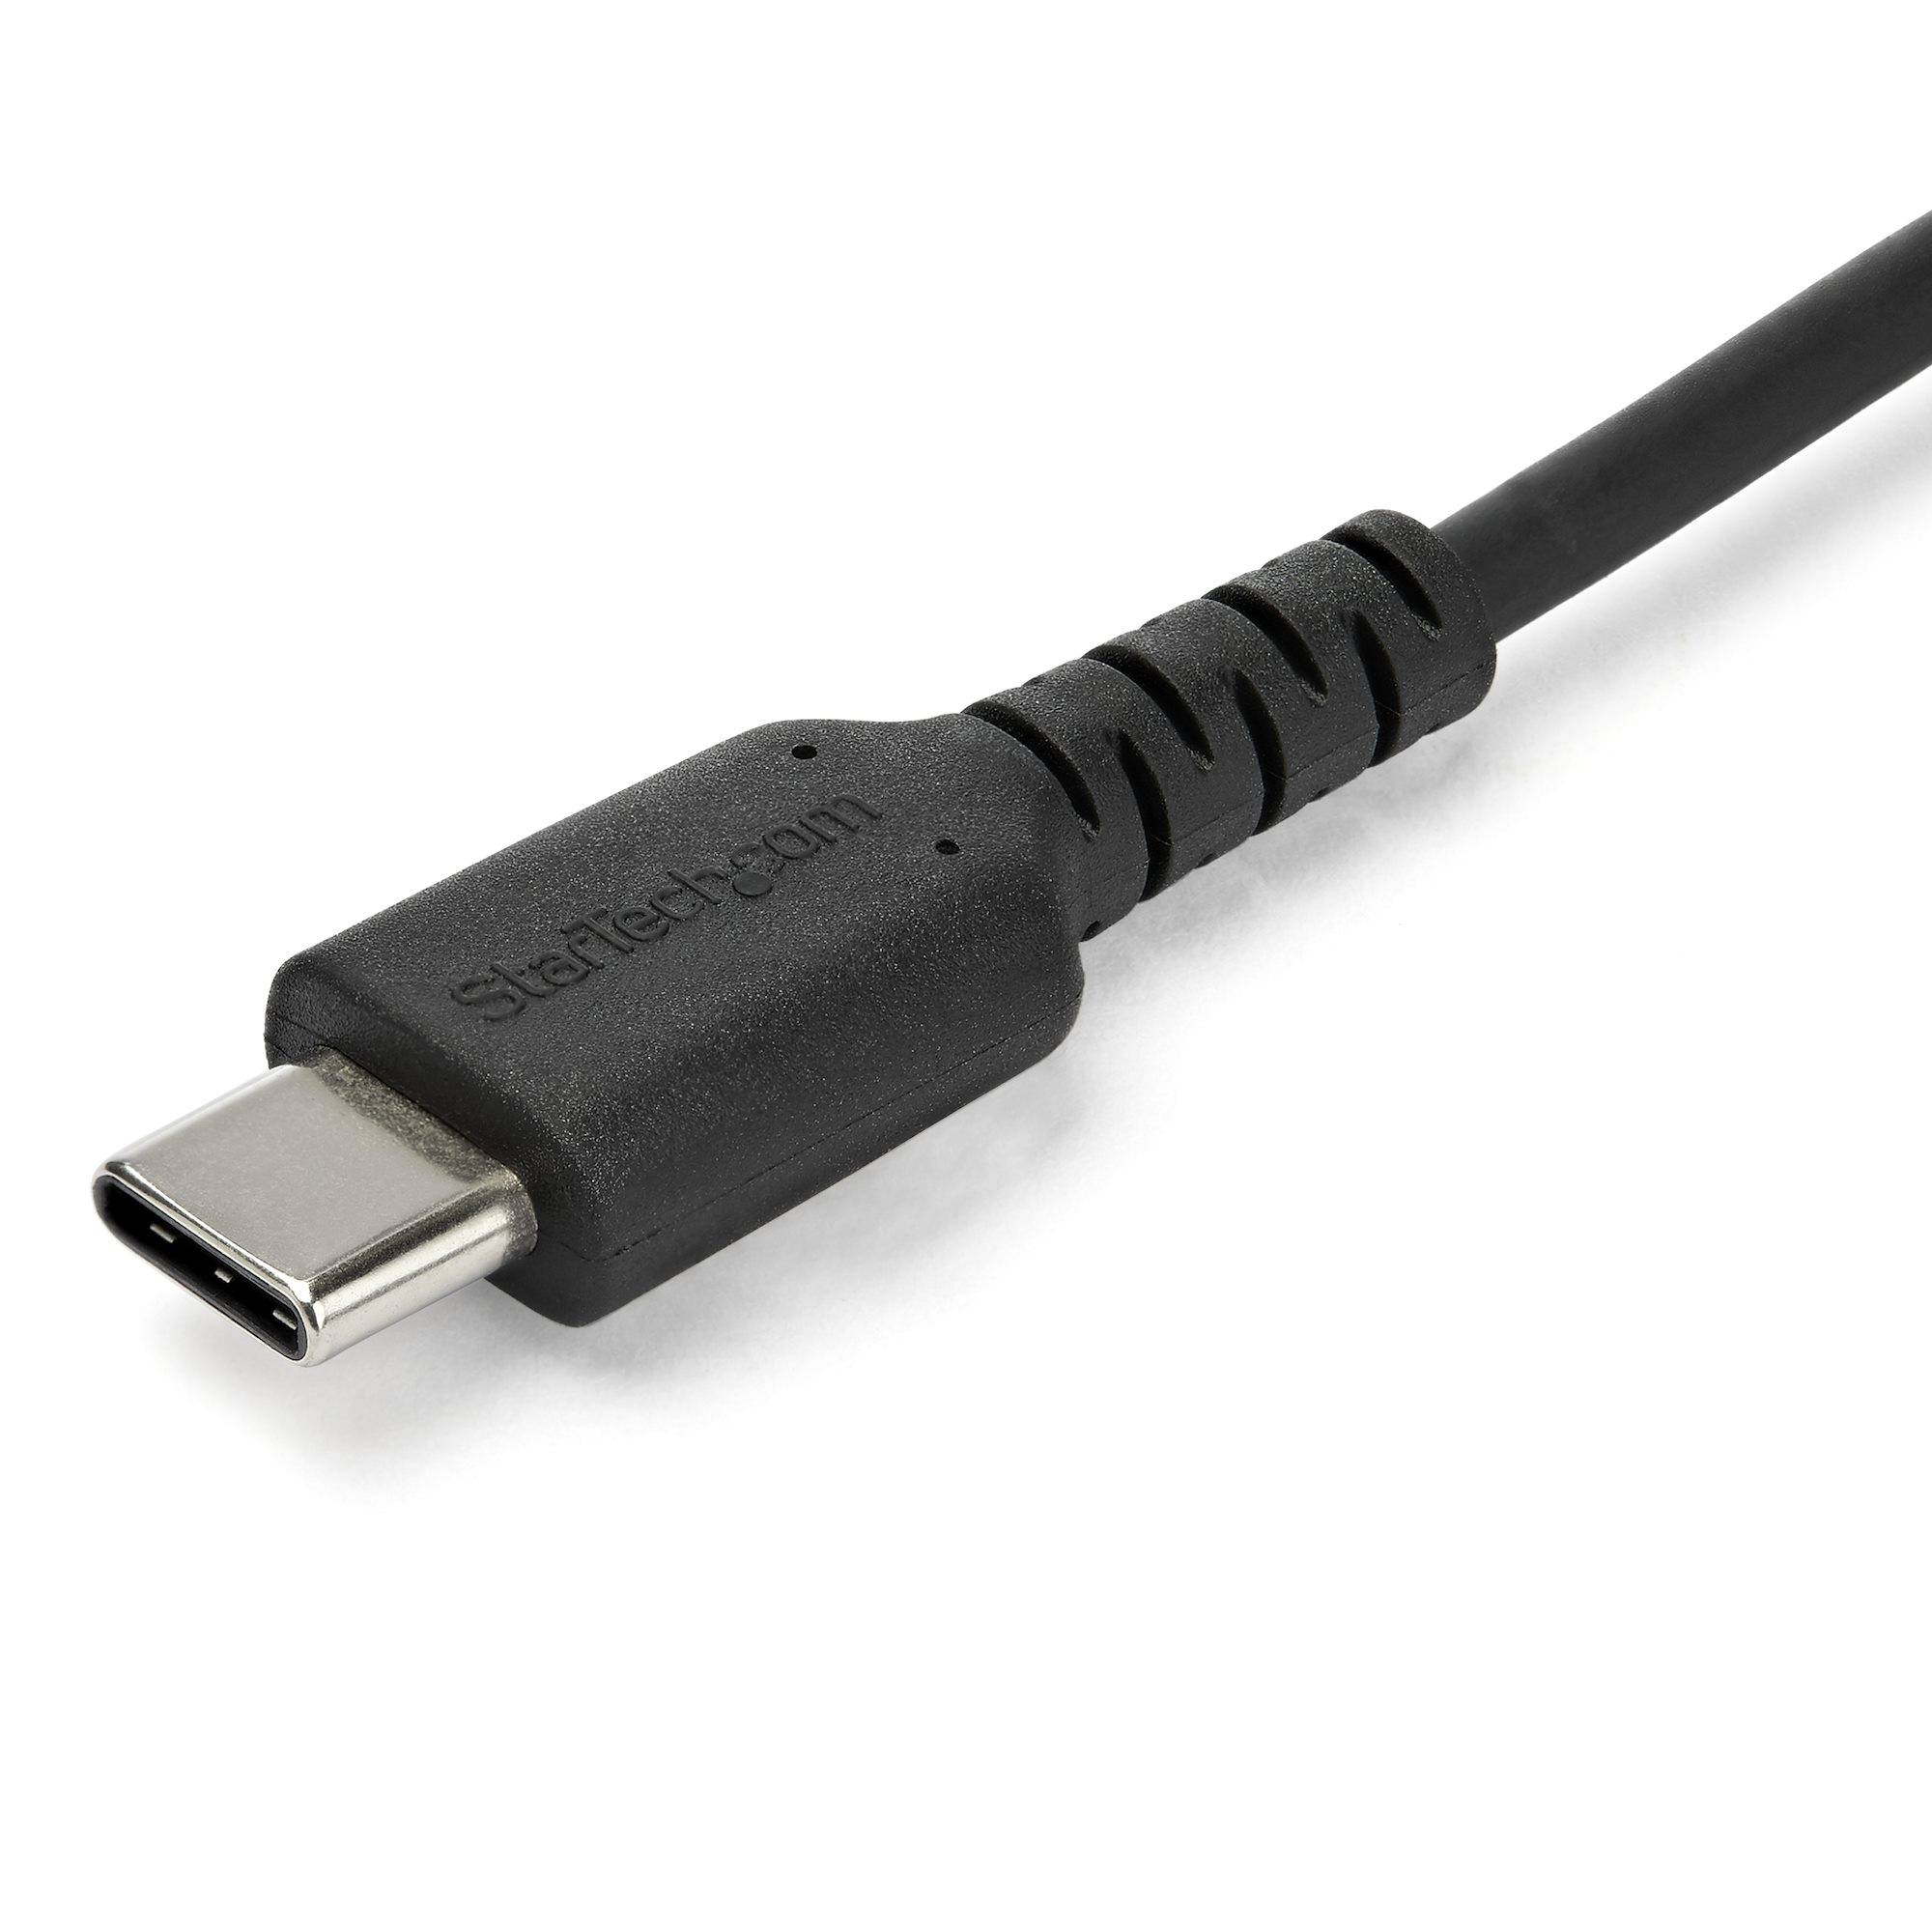 Rca Informatique - image du produit : 1M DURABLE USB 2.0 TO USB C CABLE BLACK ARAMID FIBER